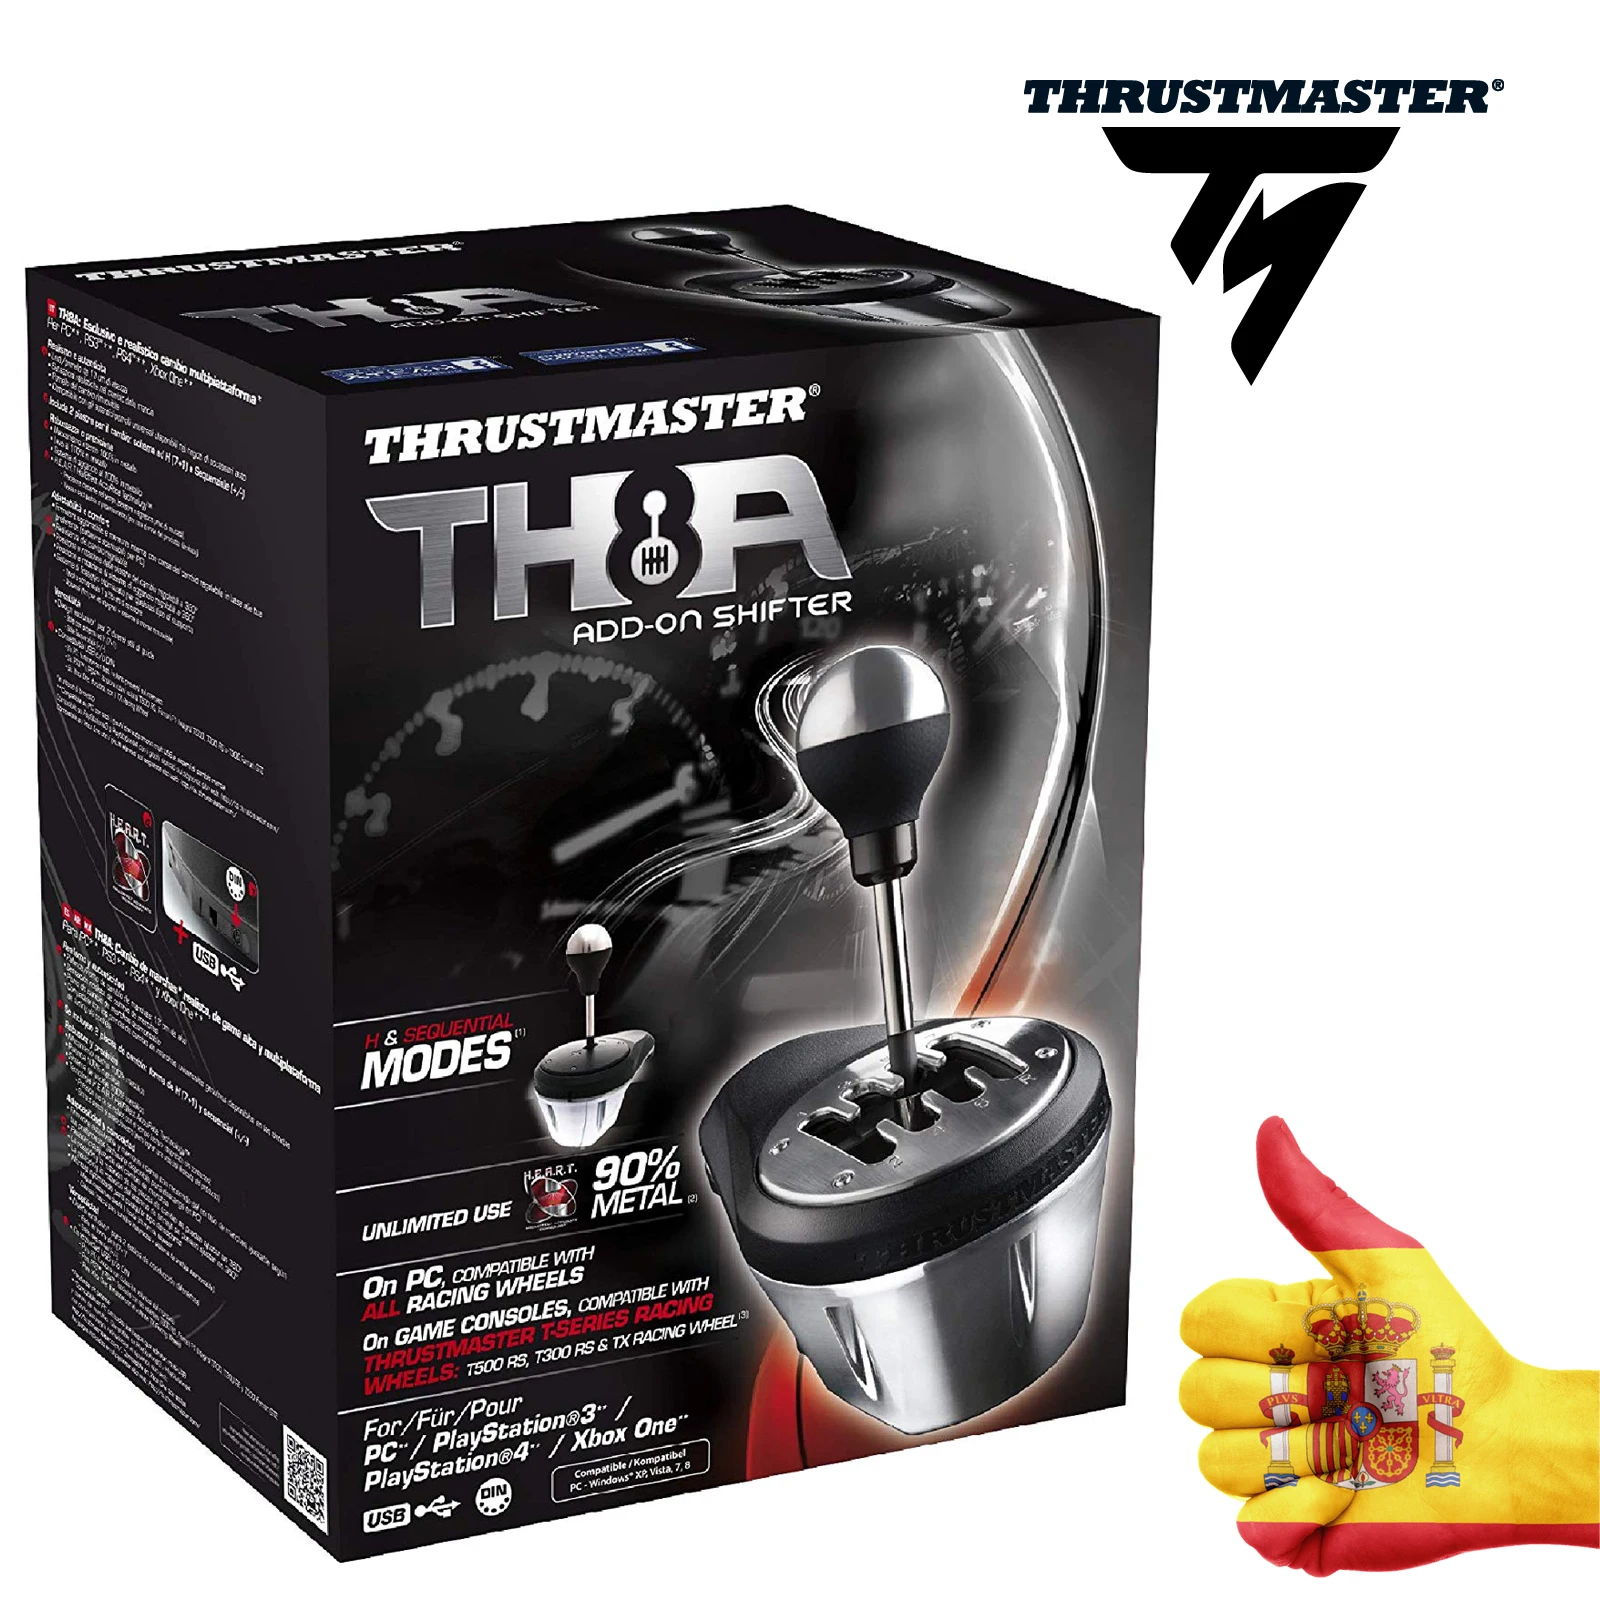 Thrustmaster Th8a Shifter Add-on-shift Lever-multiplatform-manual